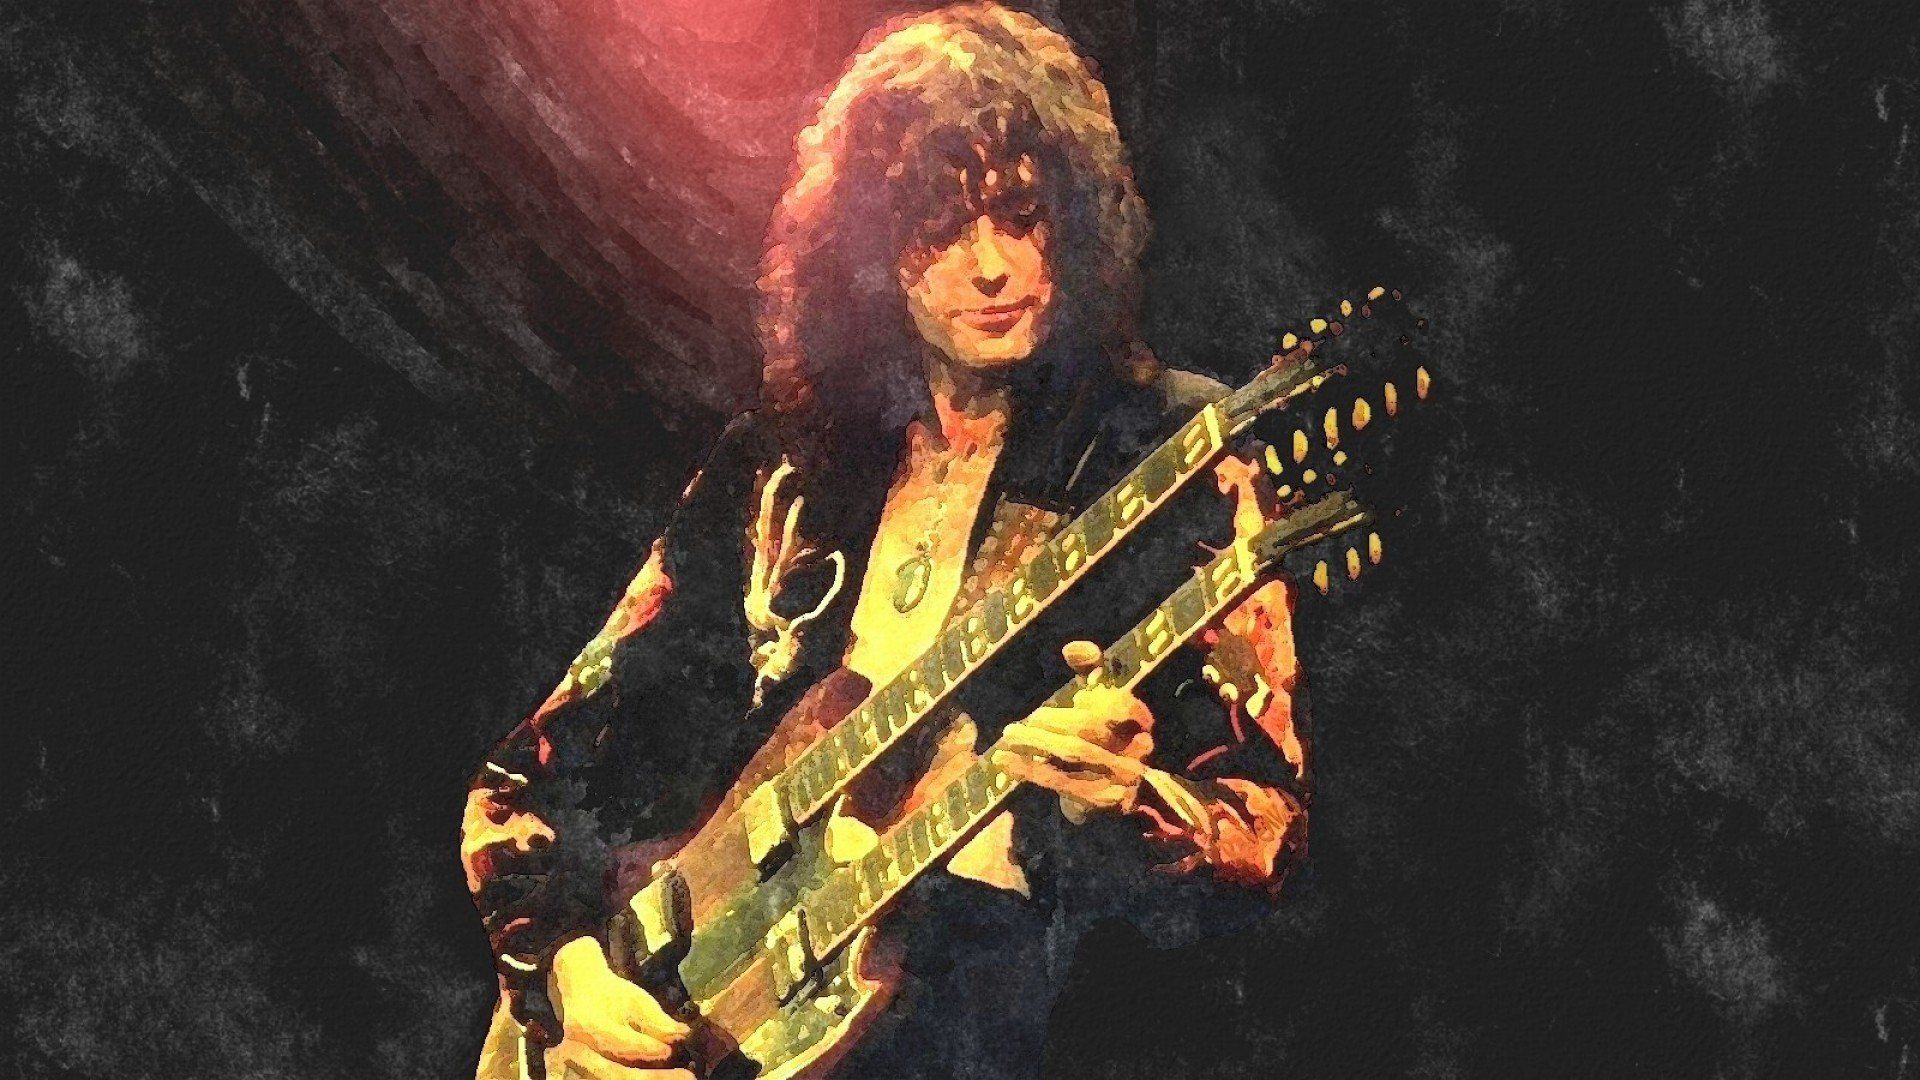 LED ZEPPELIN classic hard rock blues guitar wallpaper | 1920x1080 ...